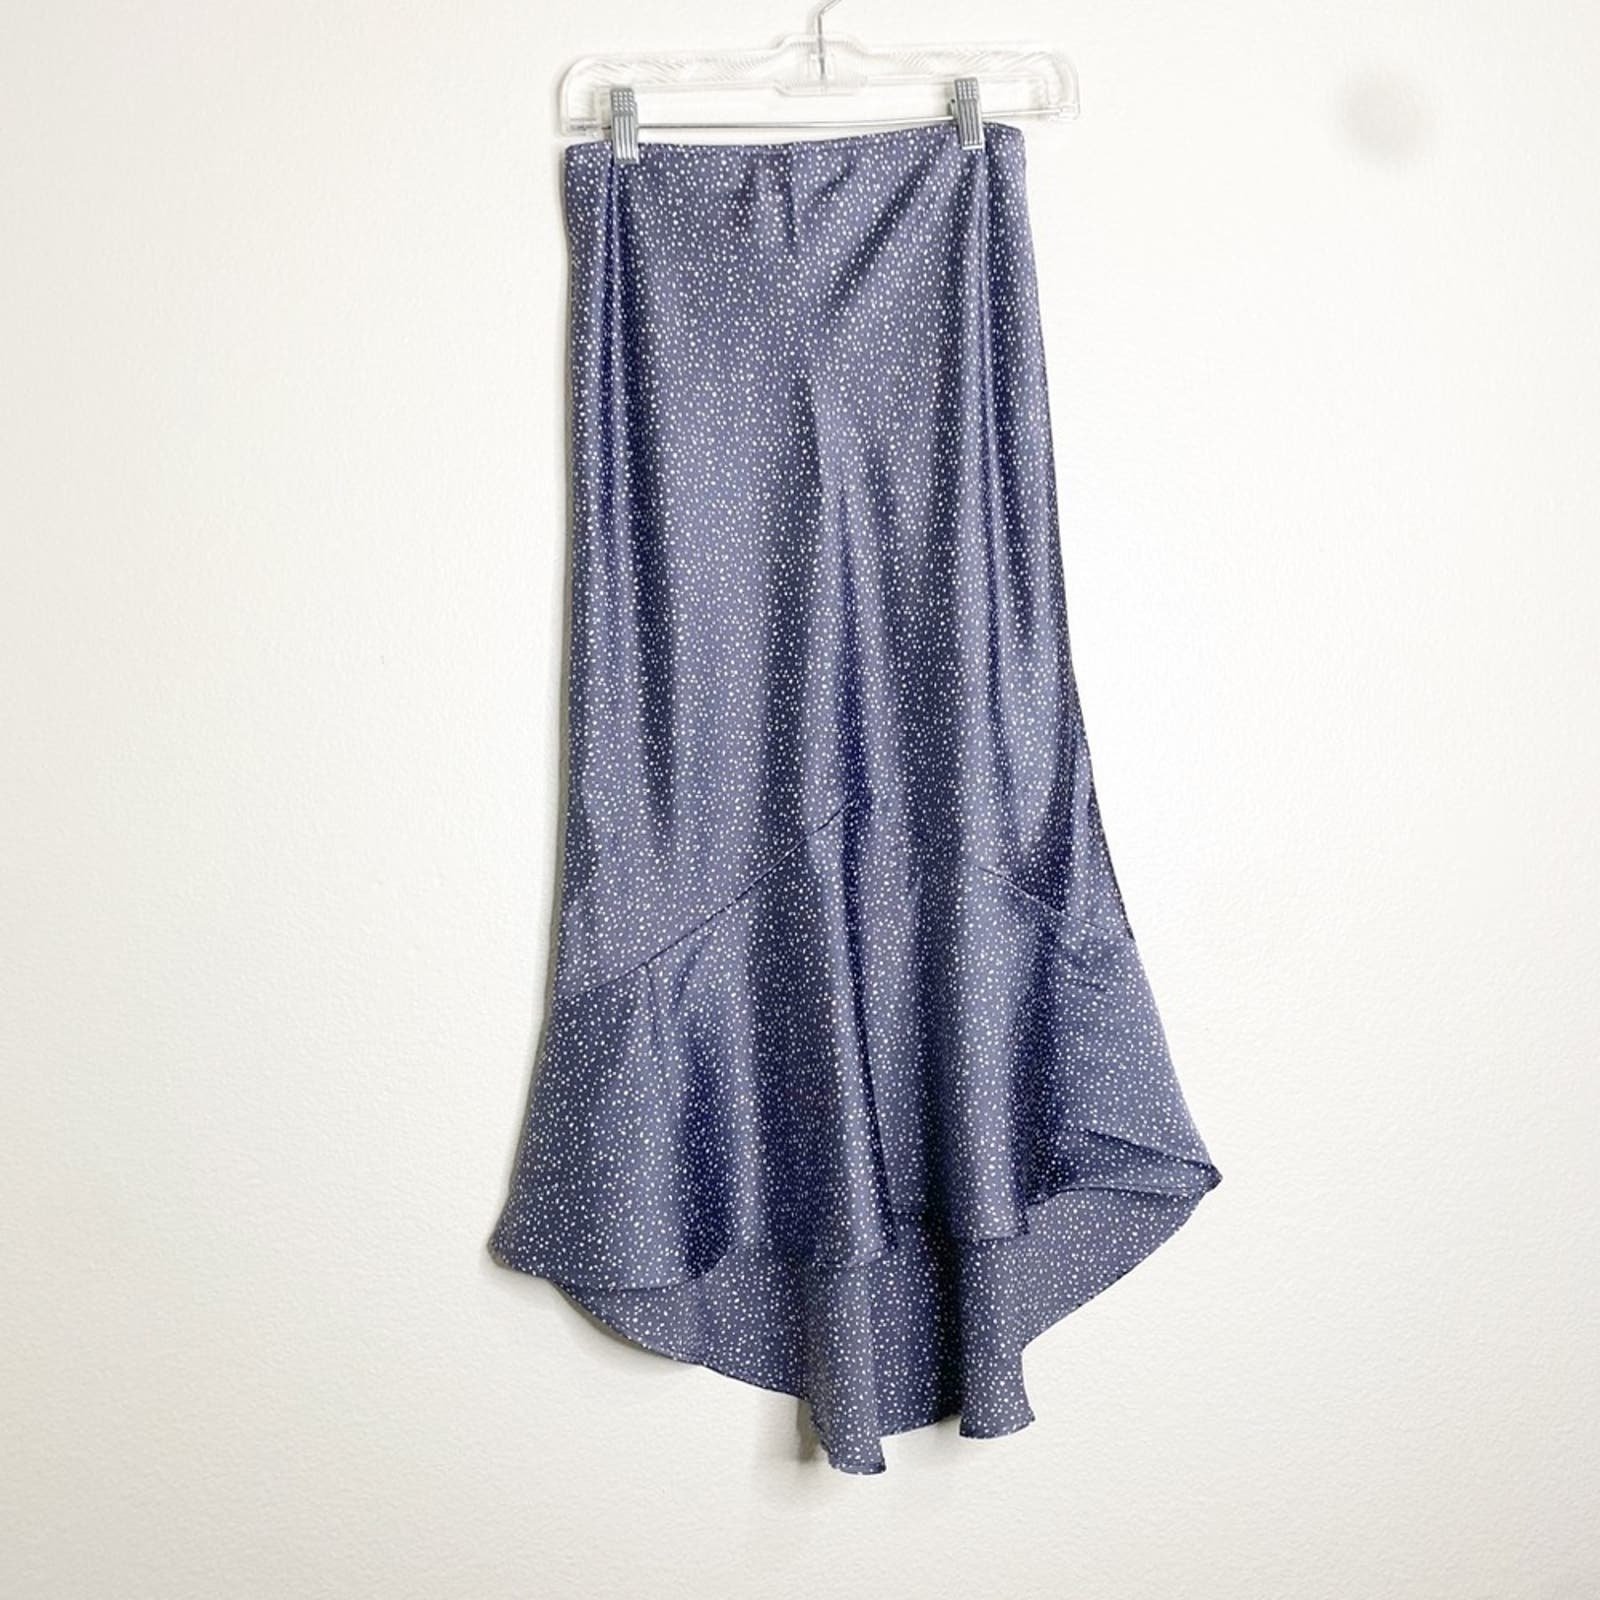 Popular Abercrombie & Fitch blue speckled midi dress size xsp Gik5TrElE Buying Cheap